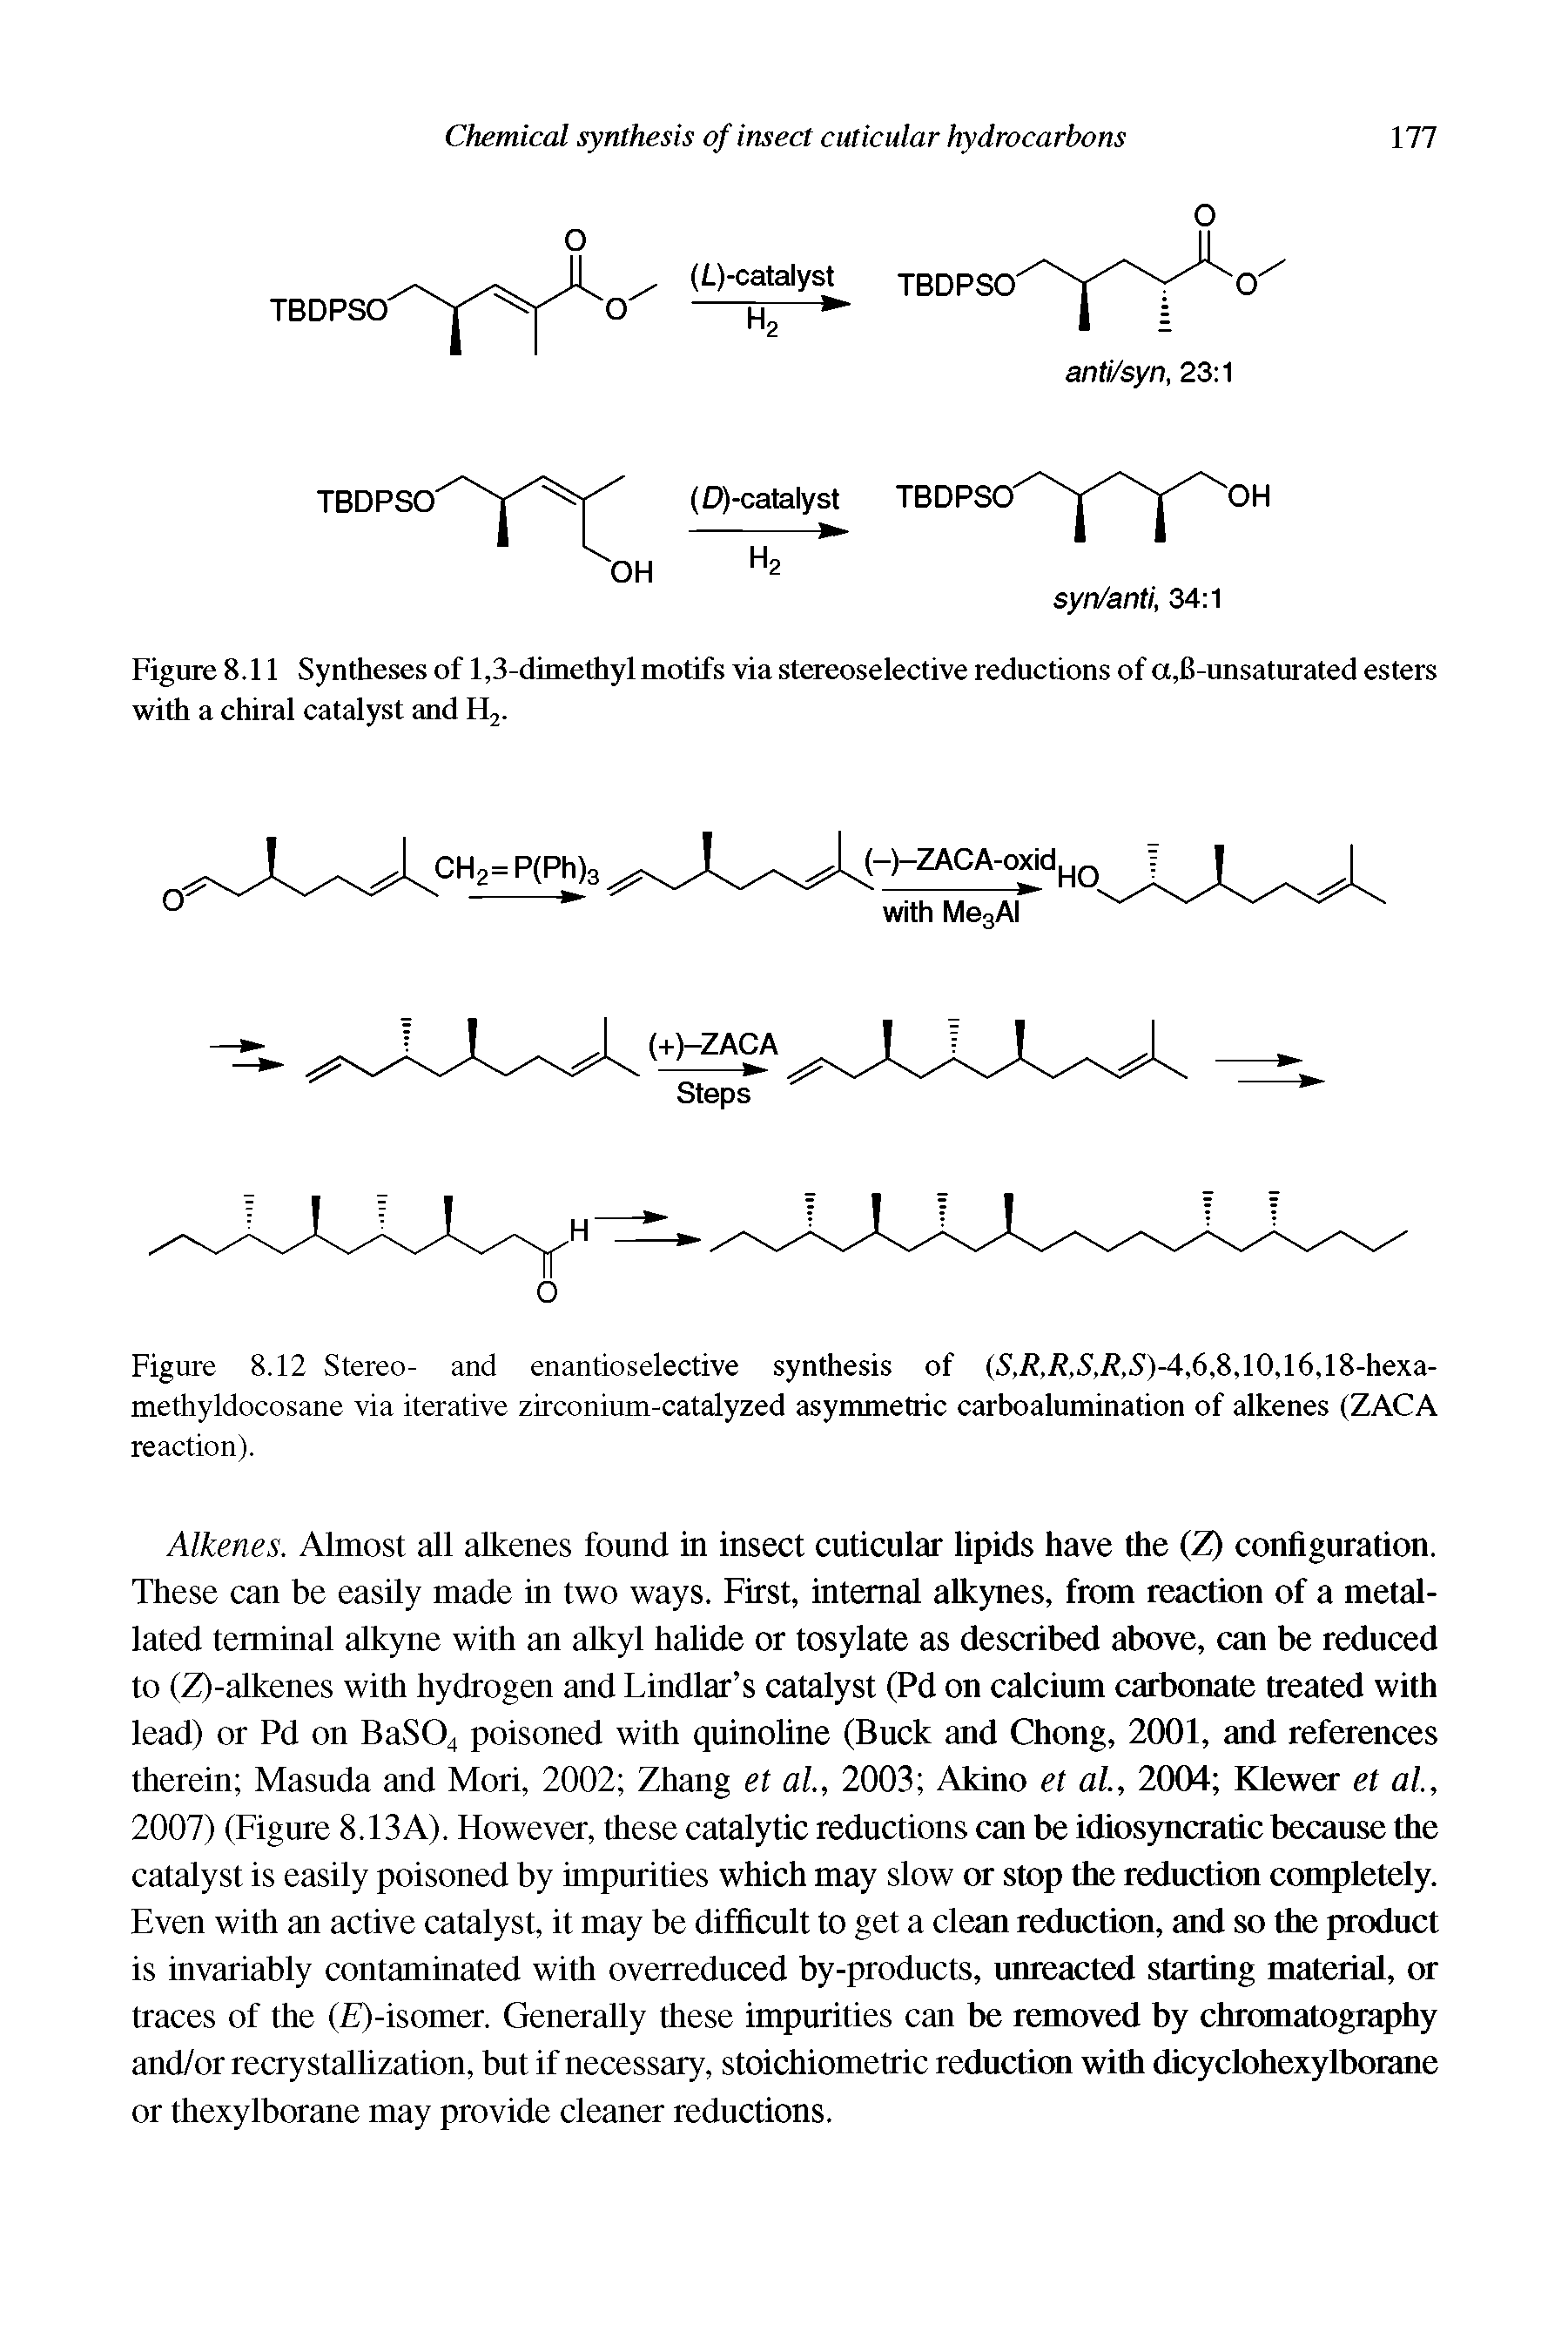 Figure 8.12 Stereo- and enantioselective synthesis of (S,f ,f ,S,f ,S)-4,6,8,10,16,18-hexa-methyldocosane via iterative zirconium-catalyzed asymmetric carboalumination of alkenes (ZACA reaction).